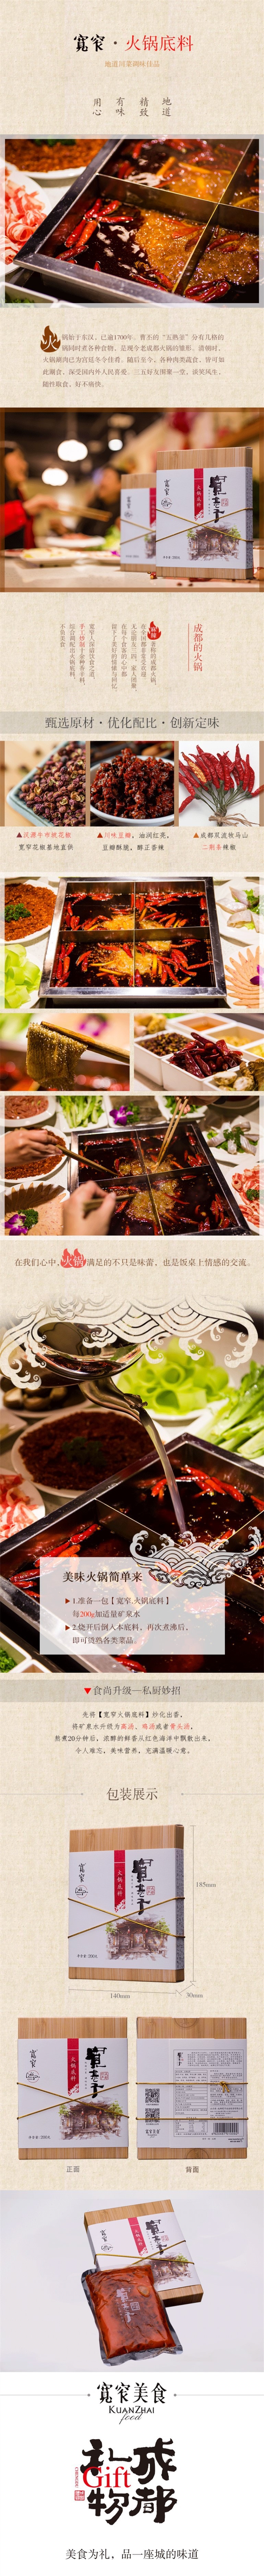 Chengdu hotpot seasoning 200g